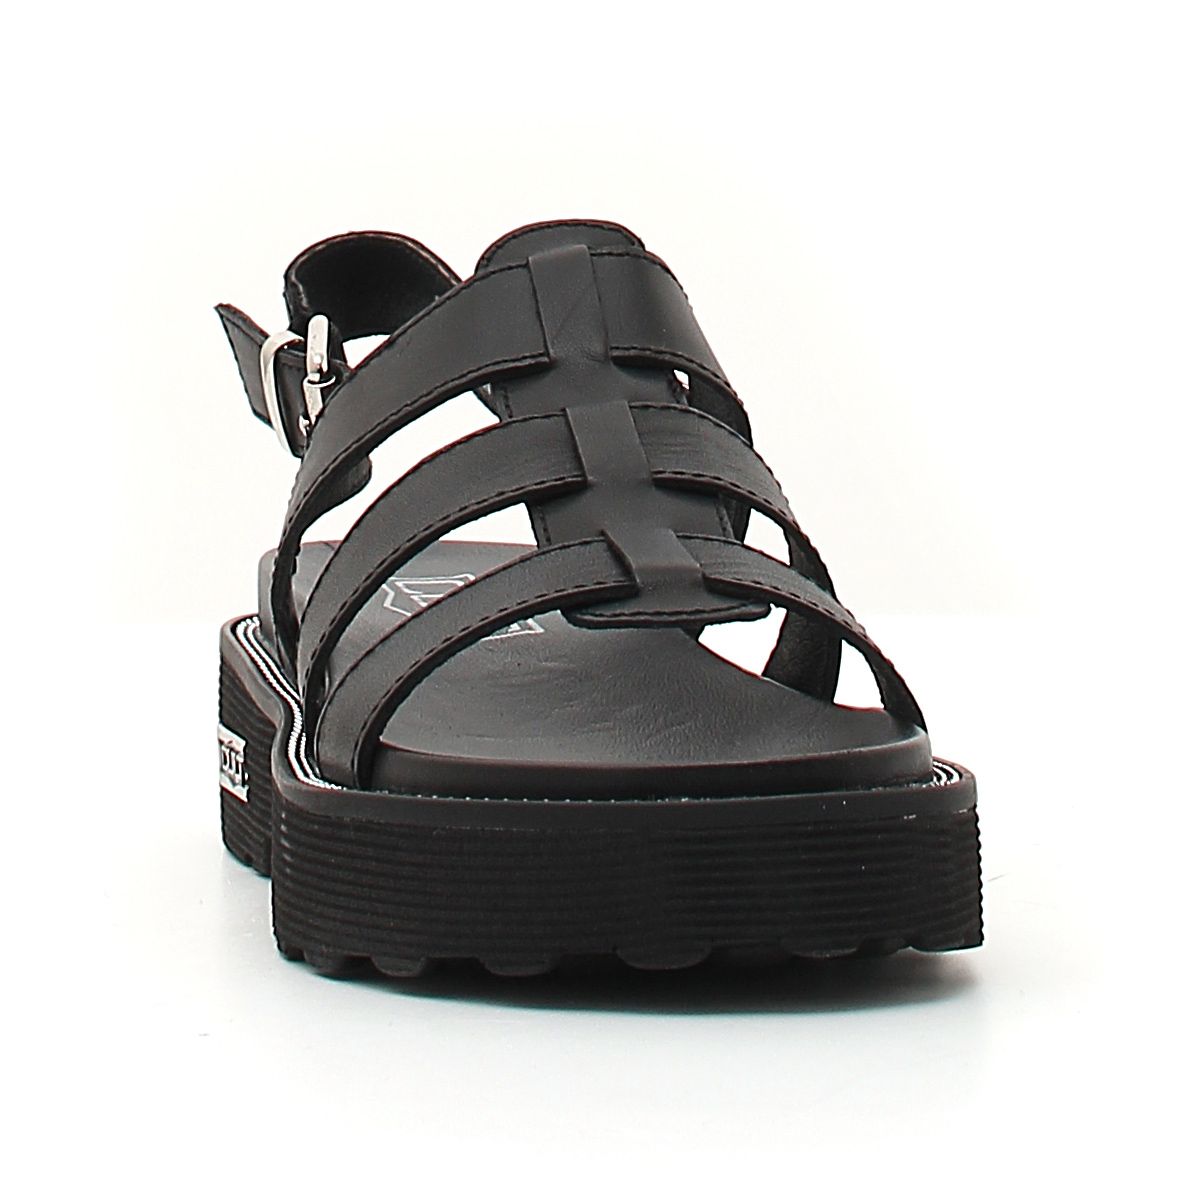 Cult Ziggy sandal 3137 W Leather black